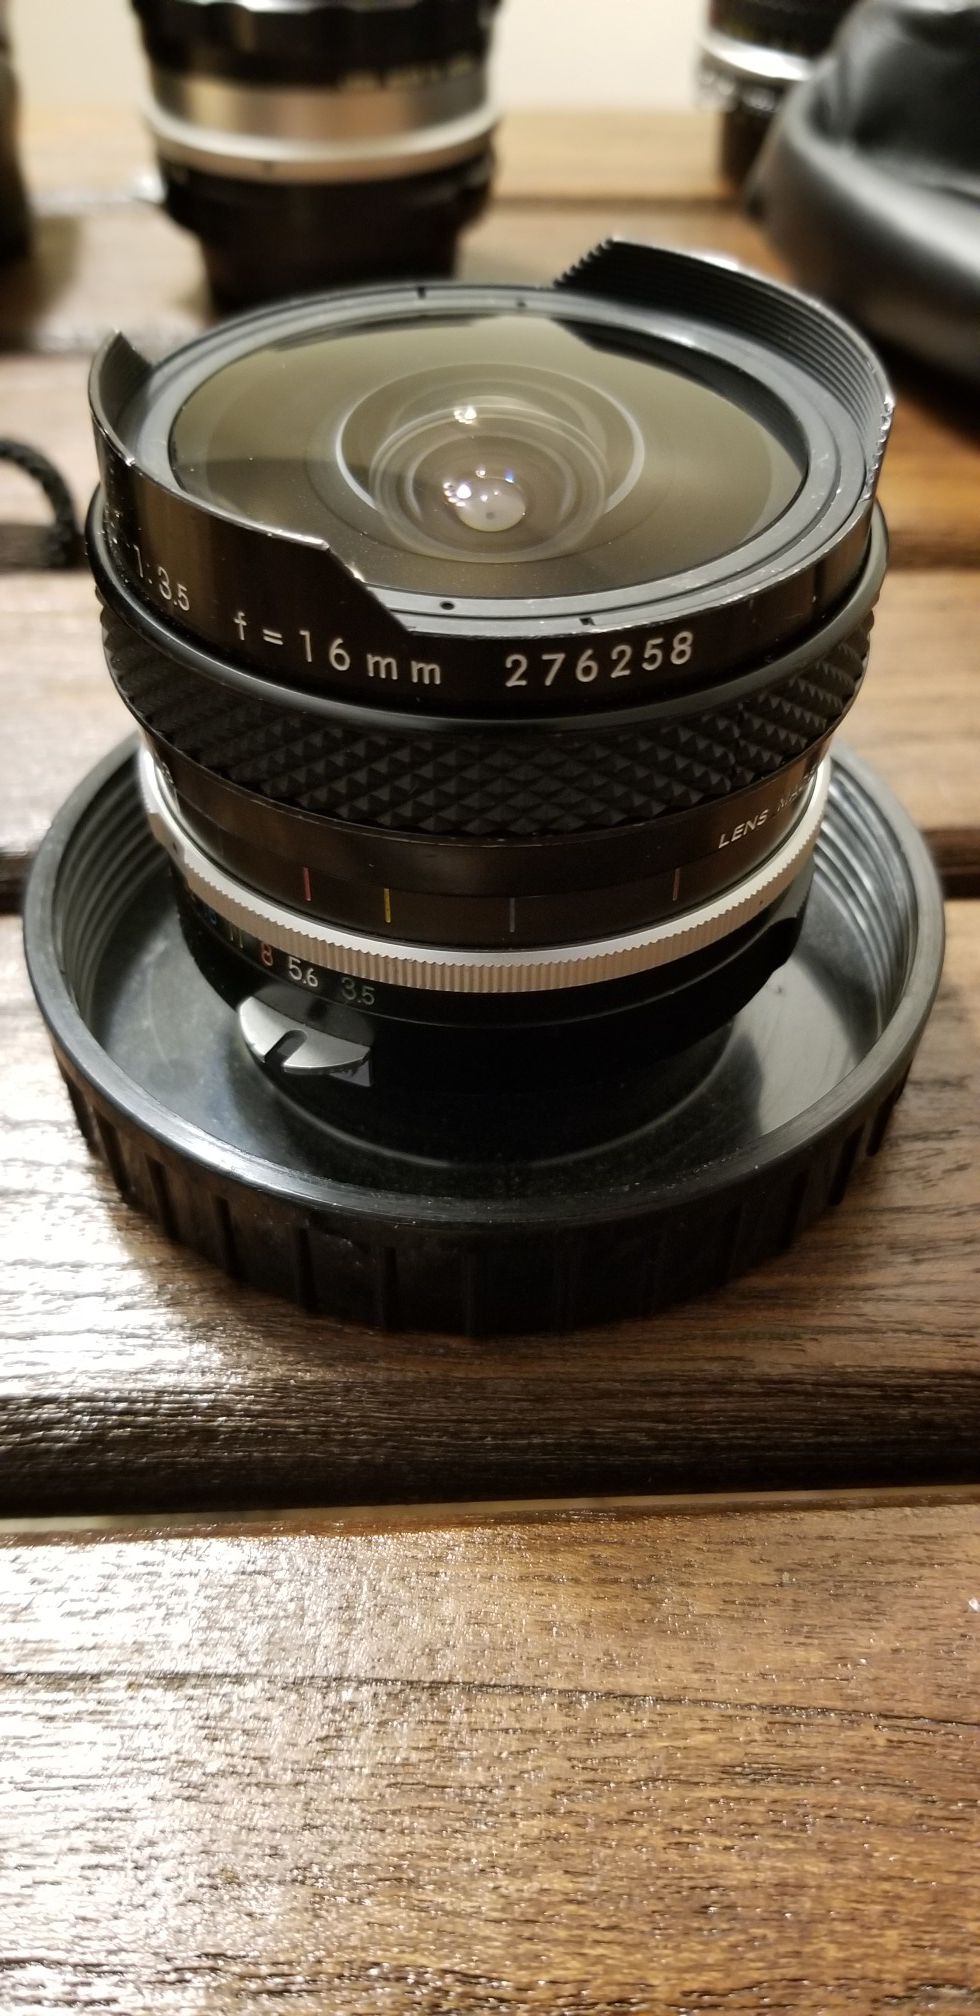 Nikon Nikkor lenses assorted (16mm fisheye included)